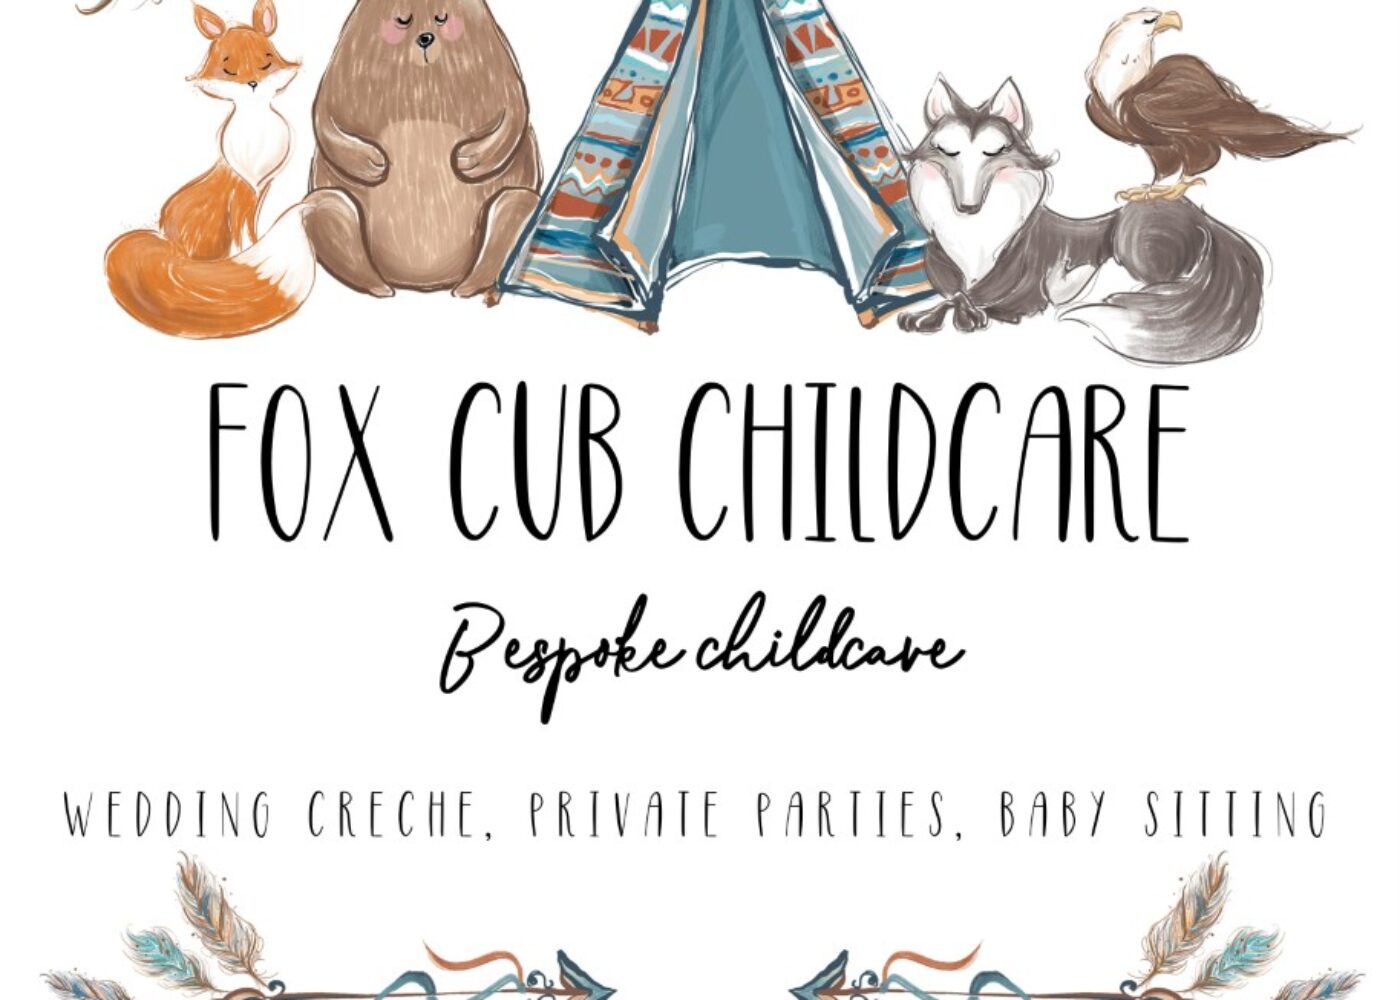 Foxcub Childcare